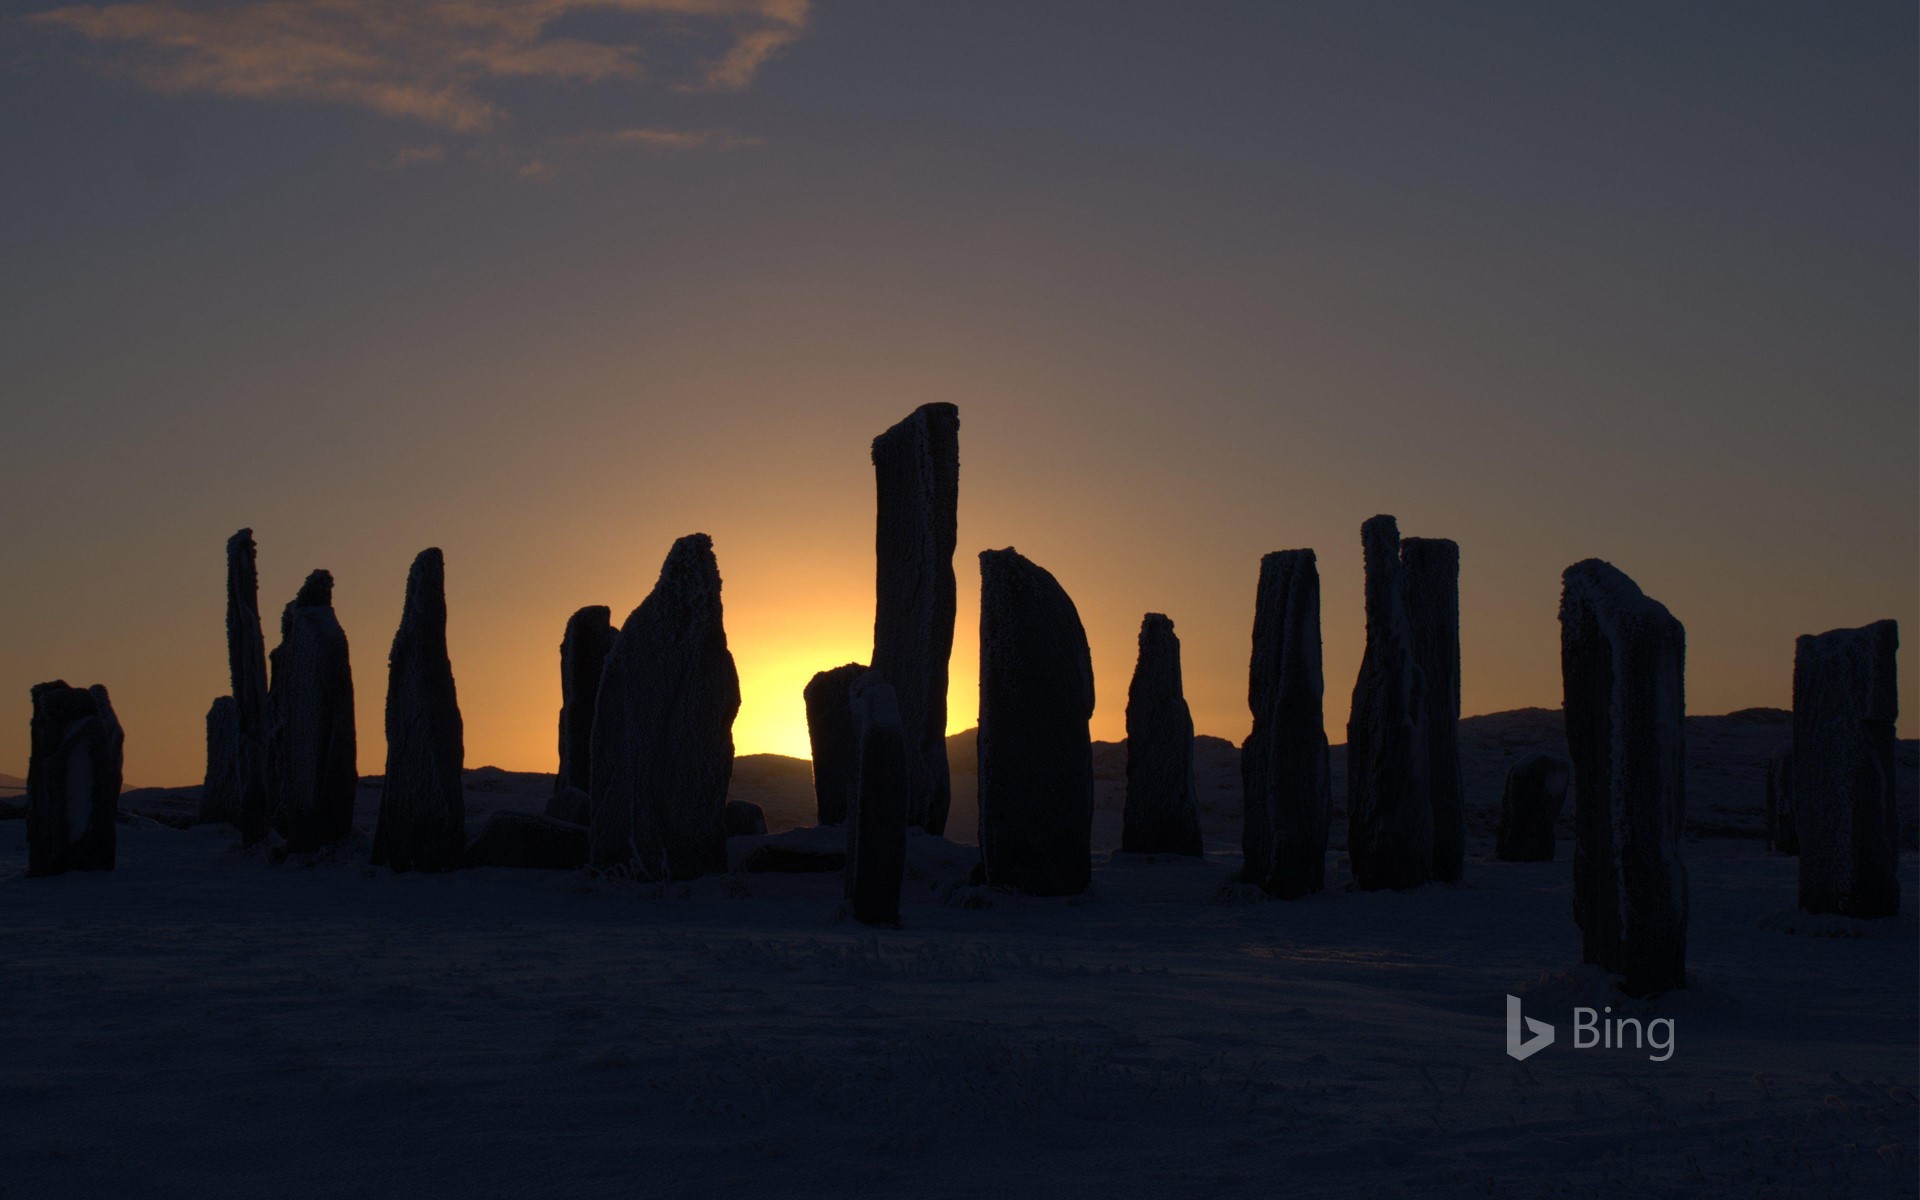 The Callanish Stones, Isle of Lewis, at sunset